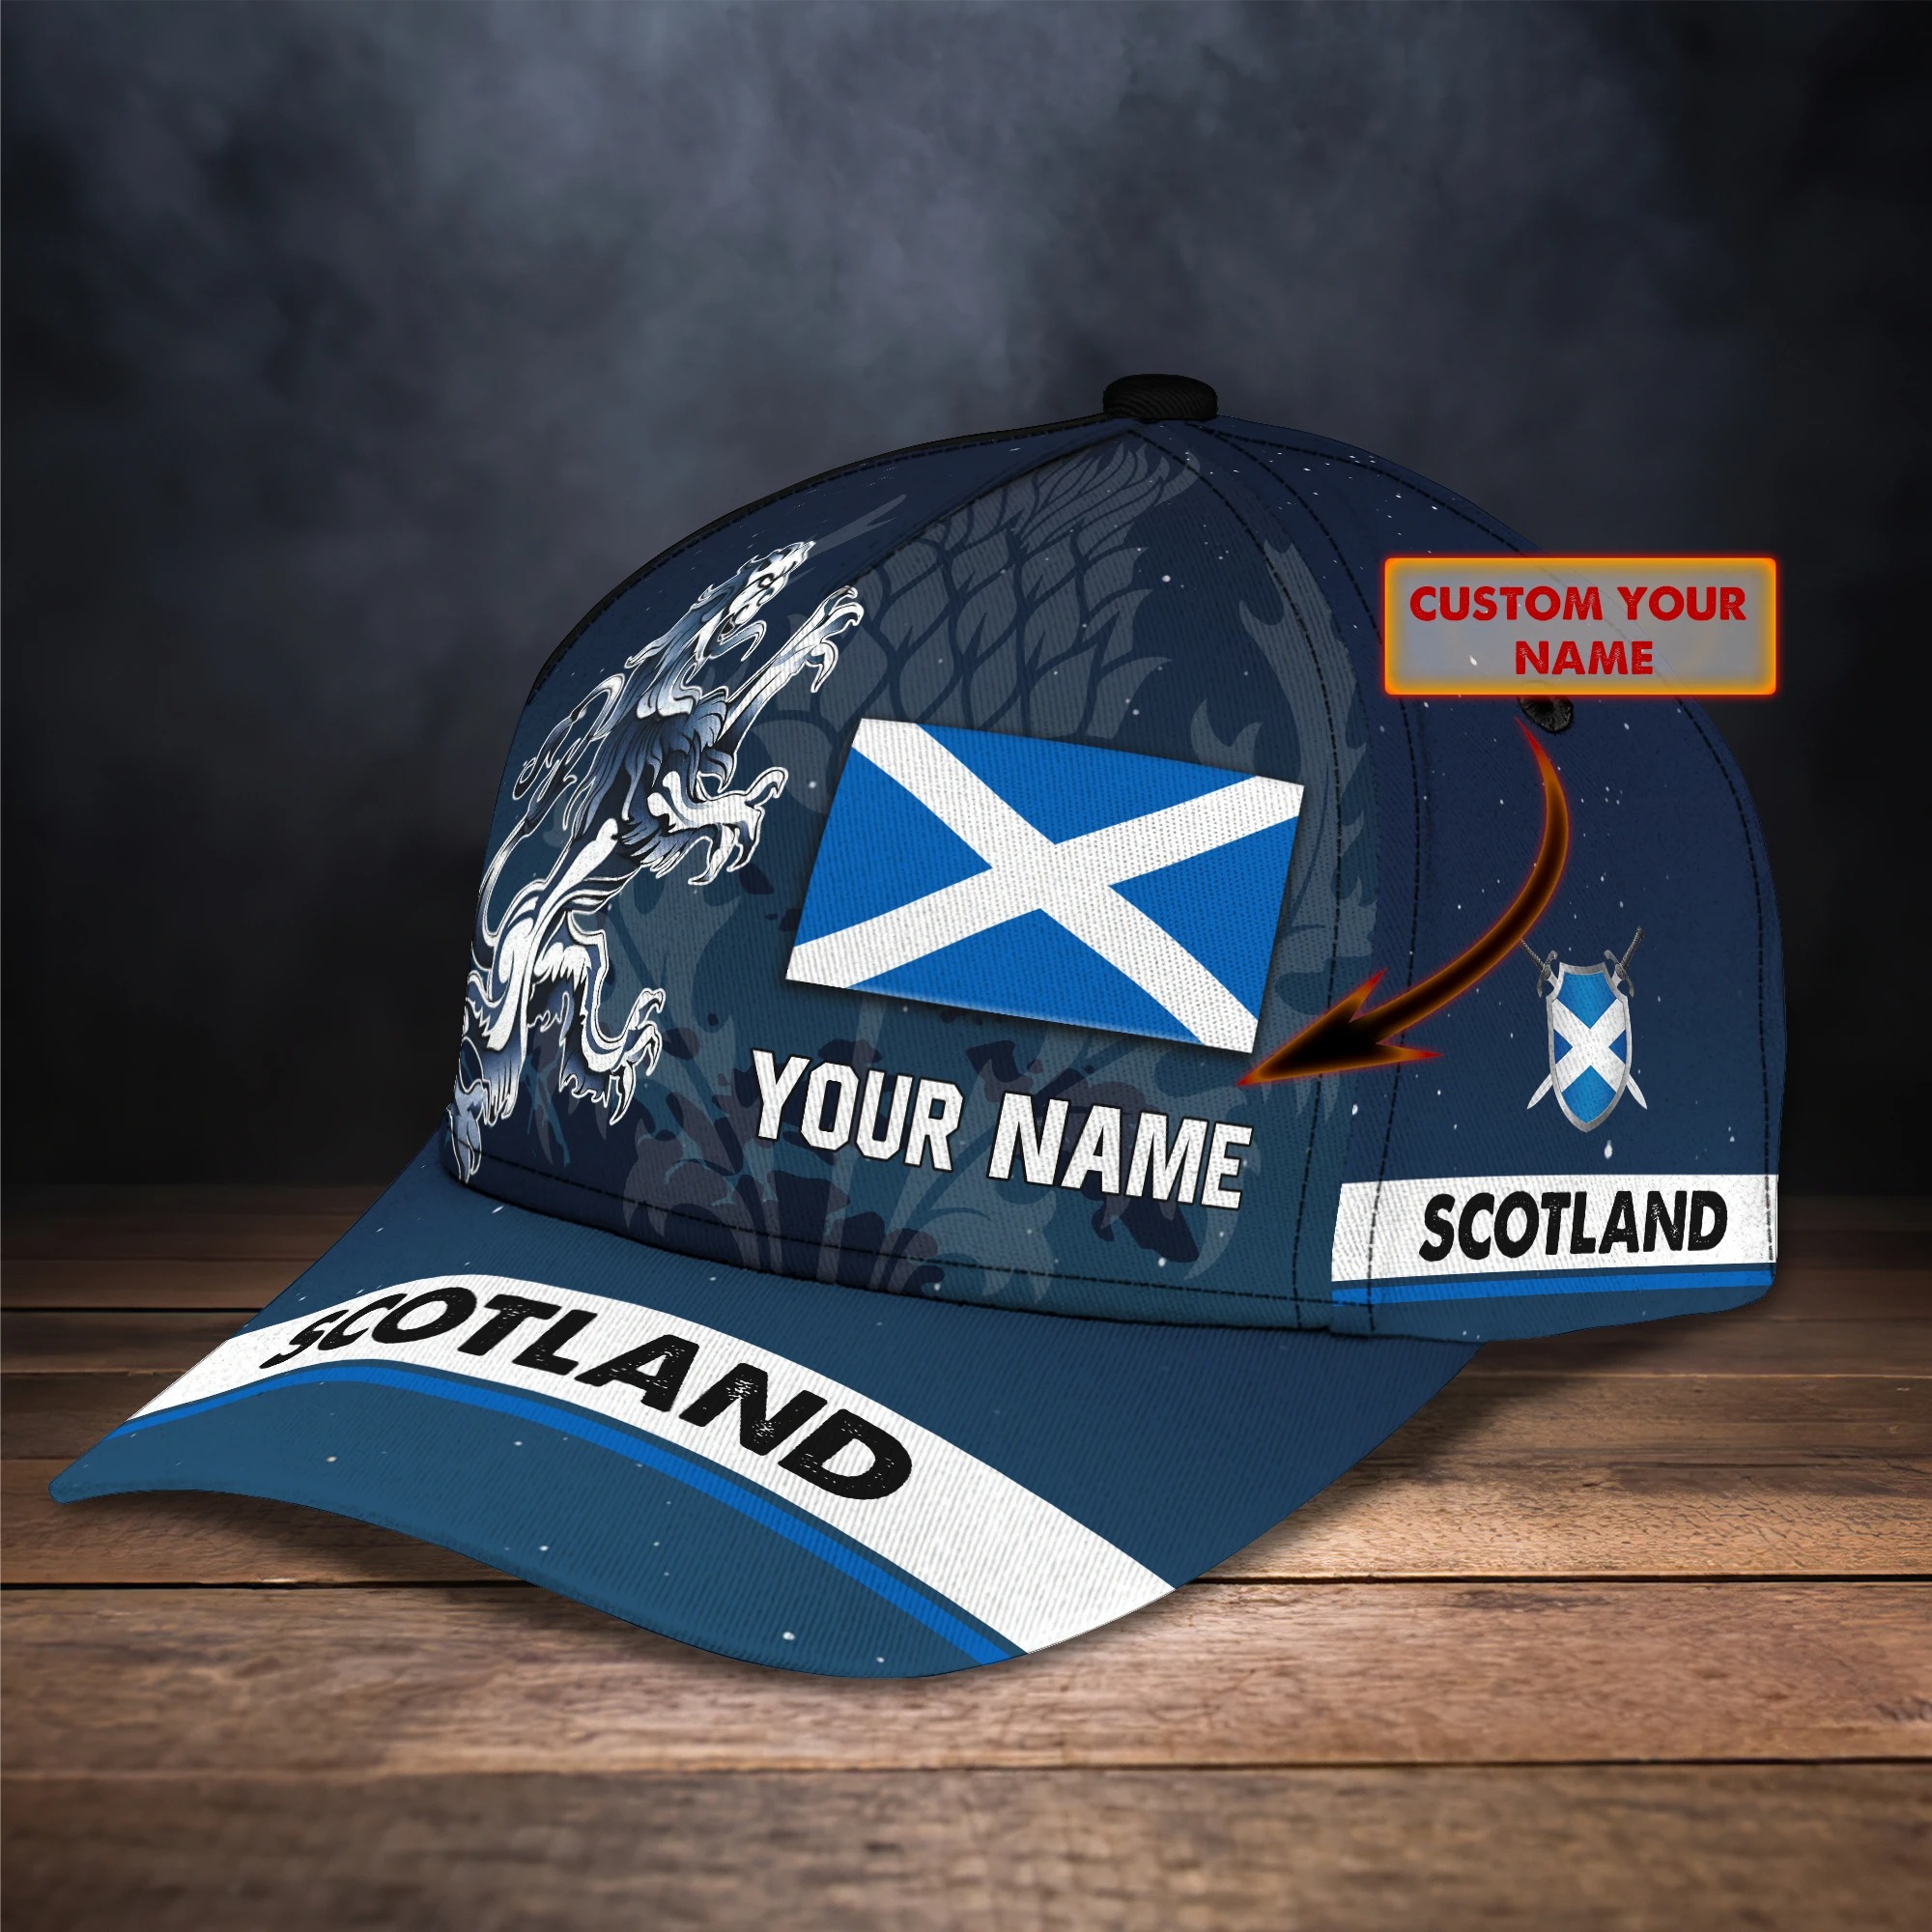 Scotland personalized name cap 1